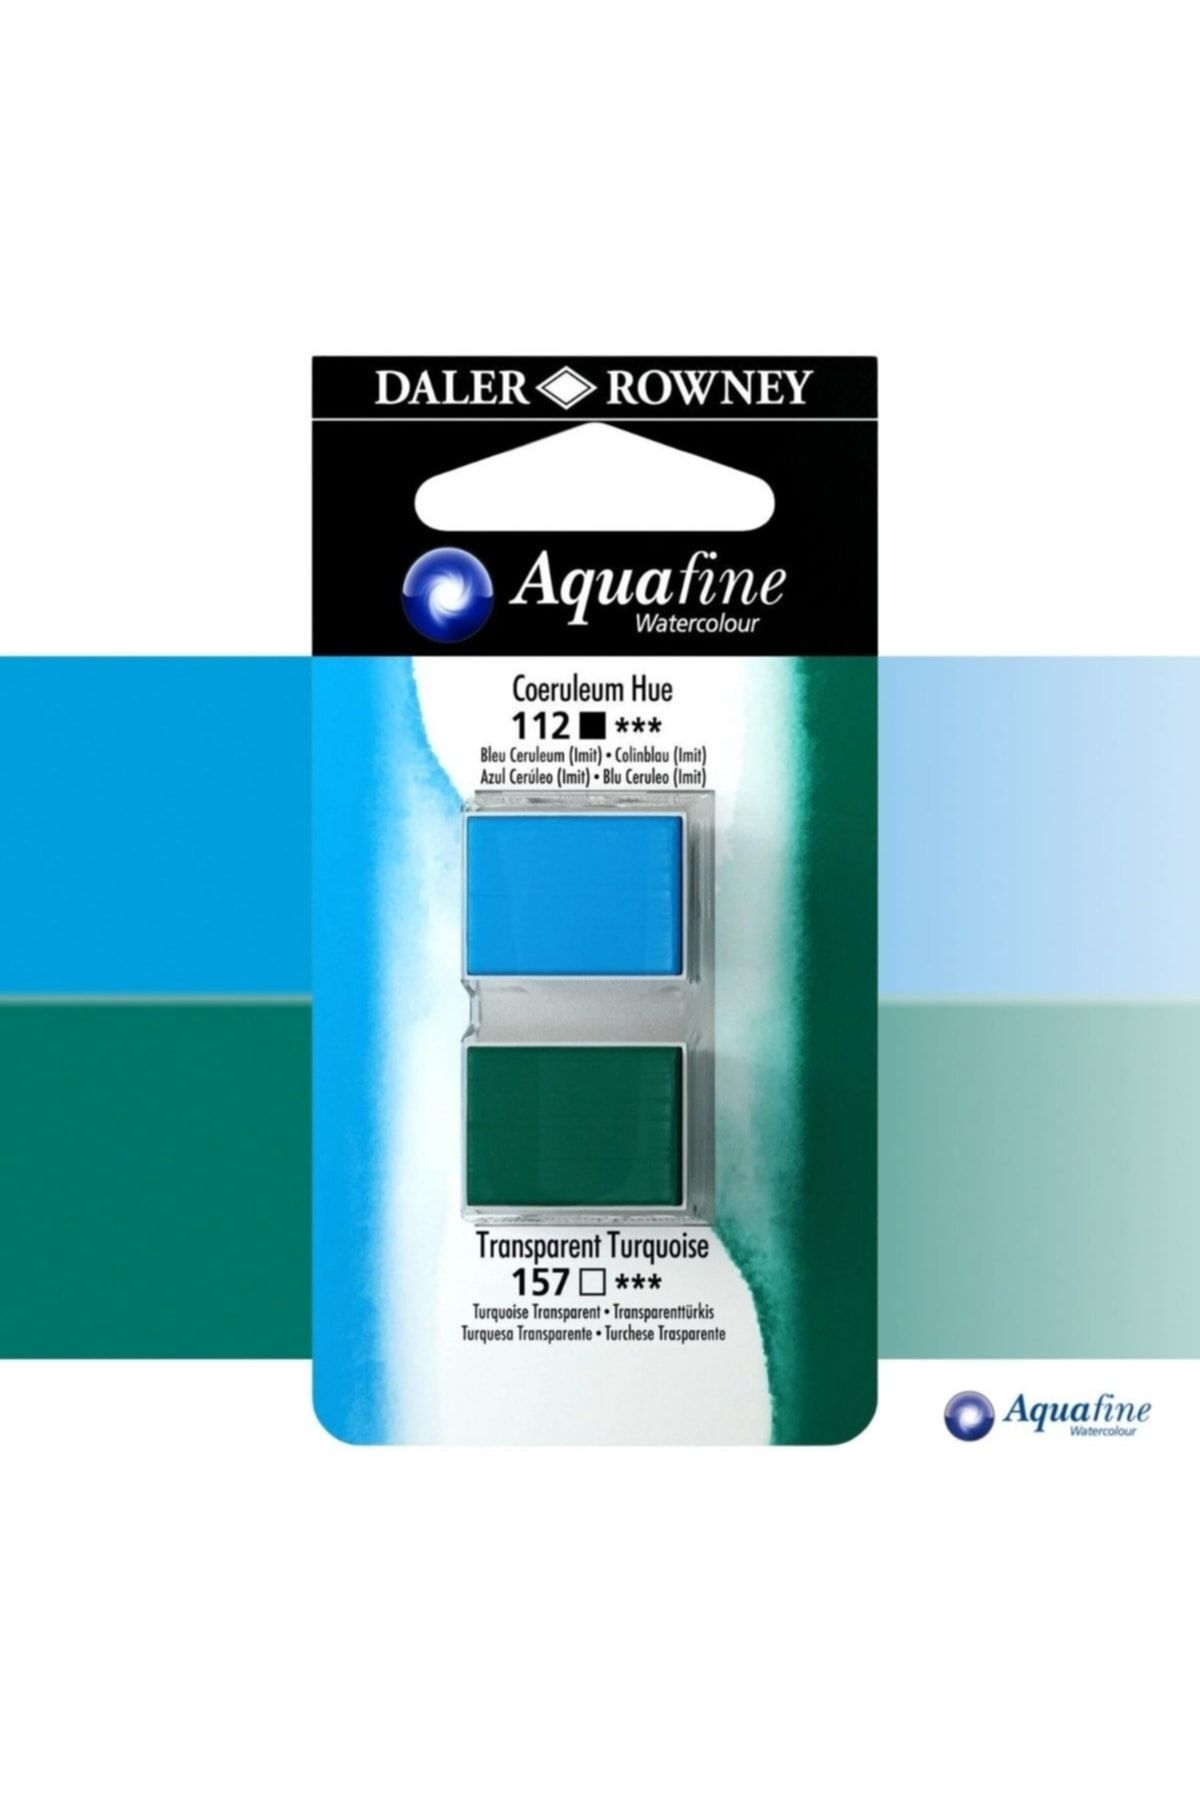 Daler Rowney Aquafine 2li Sulu Boya Tableti 112 Coeruleum Blue Hue - 157 Transparent Turqouise